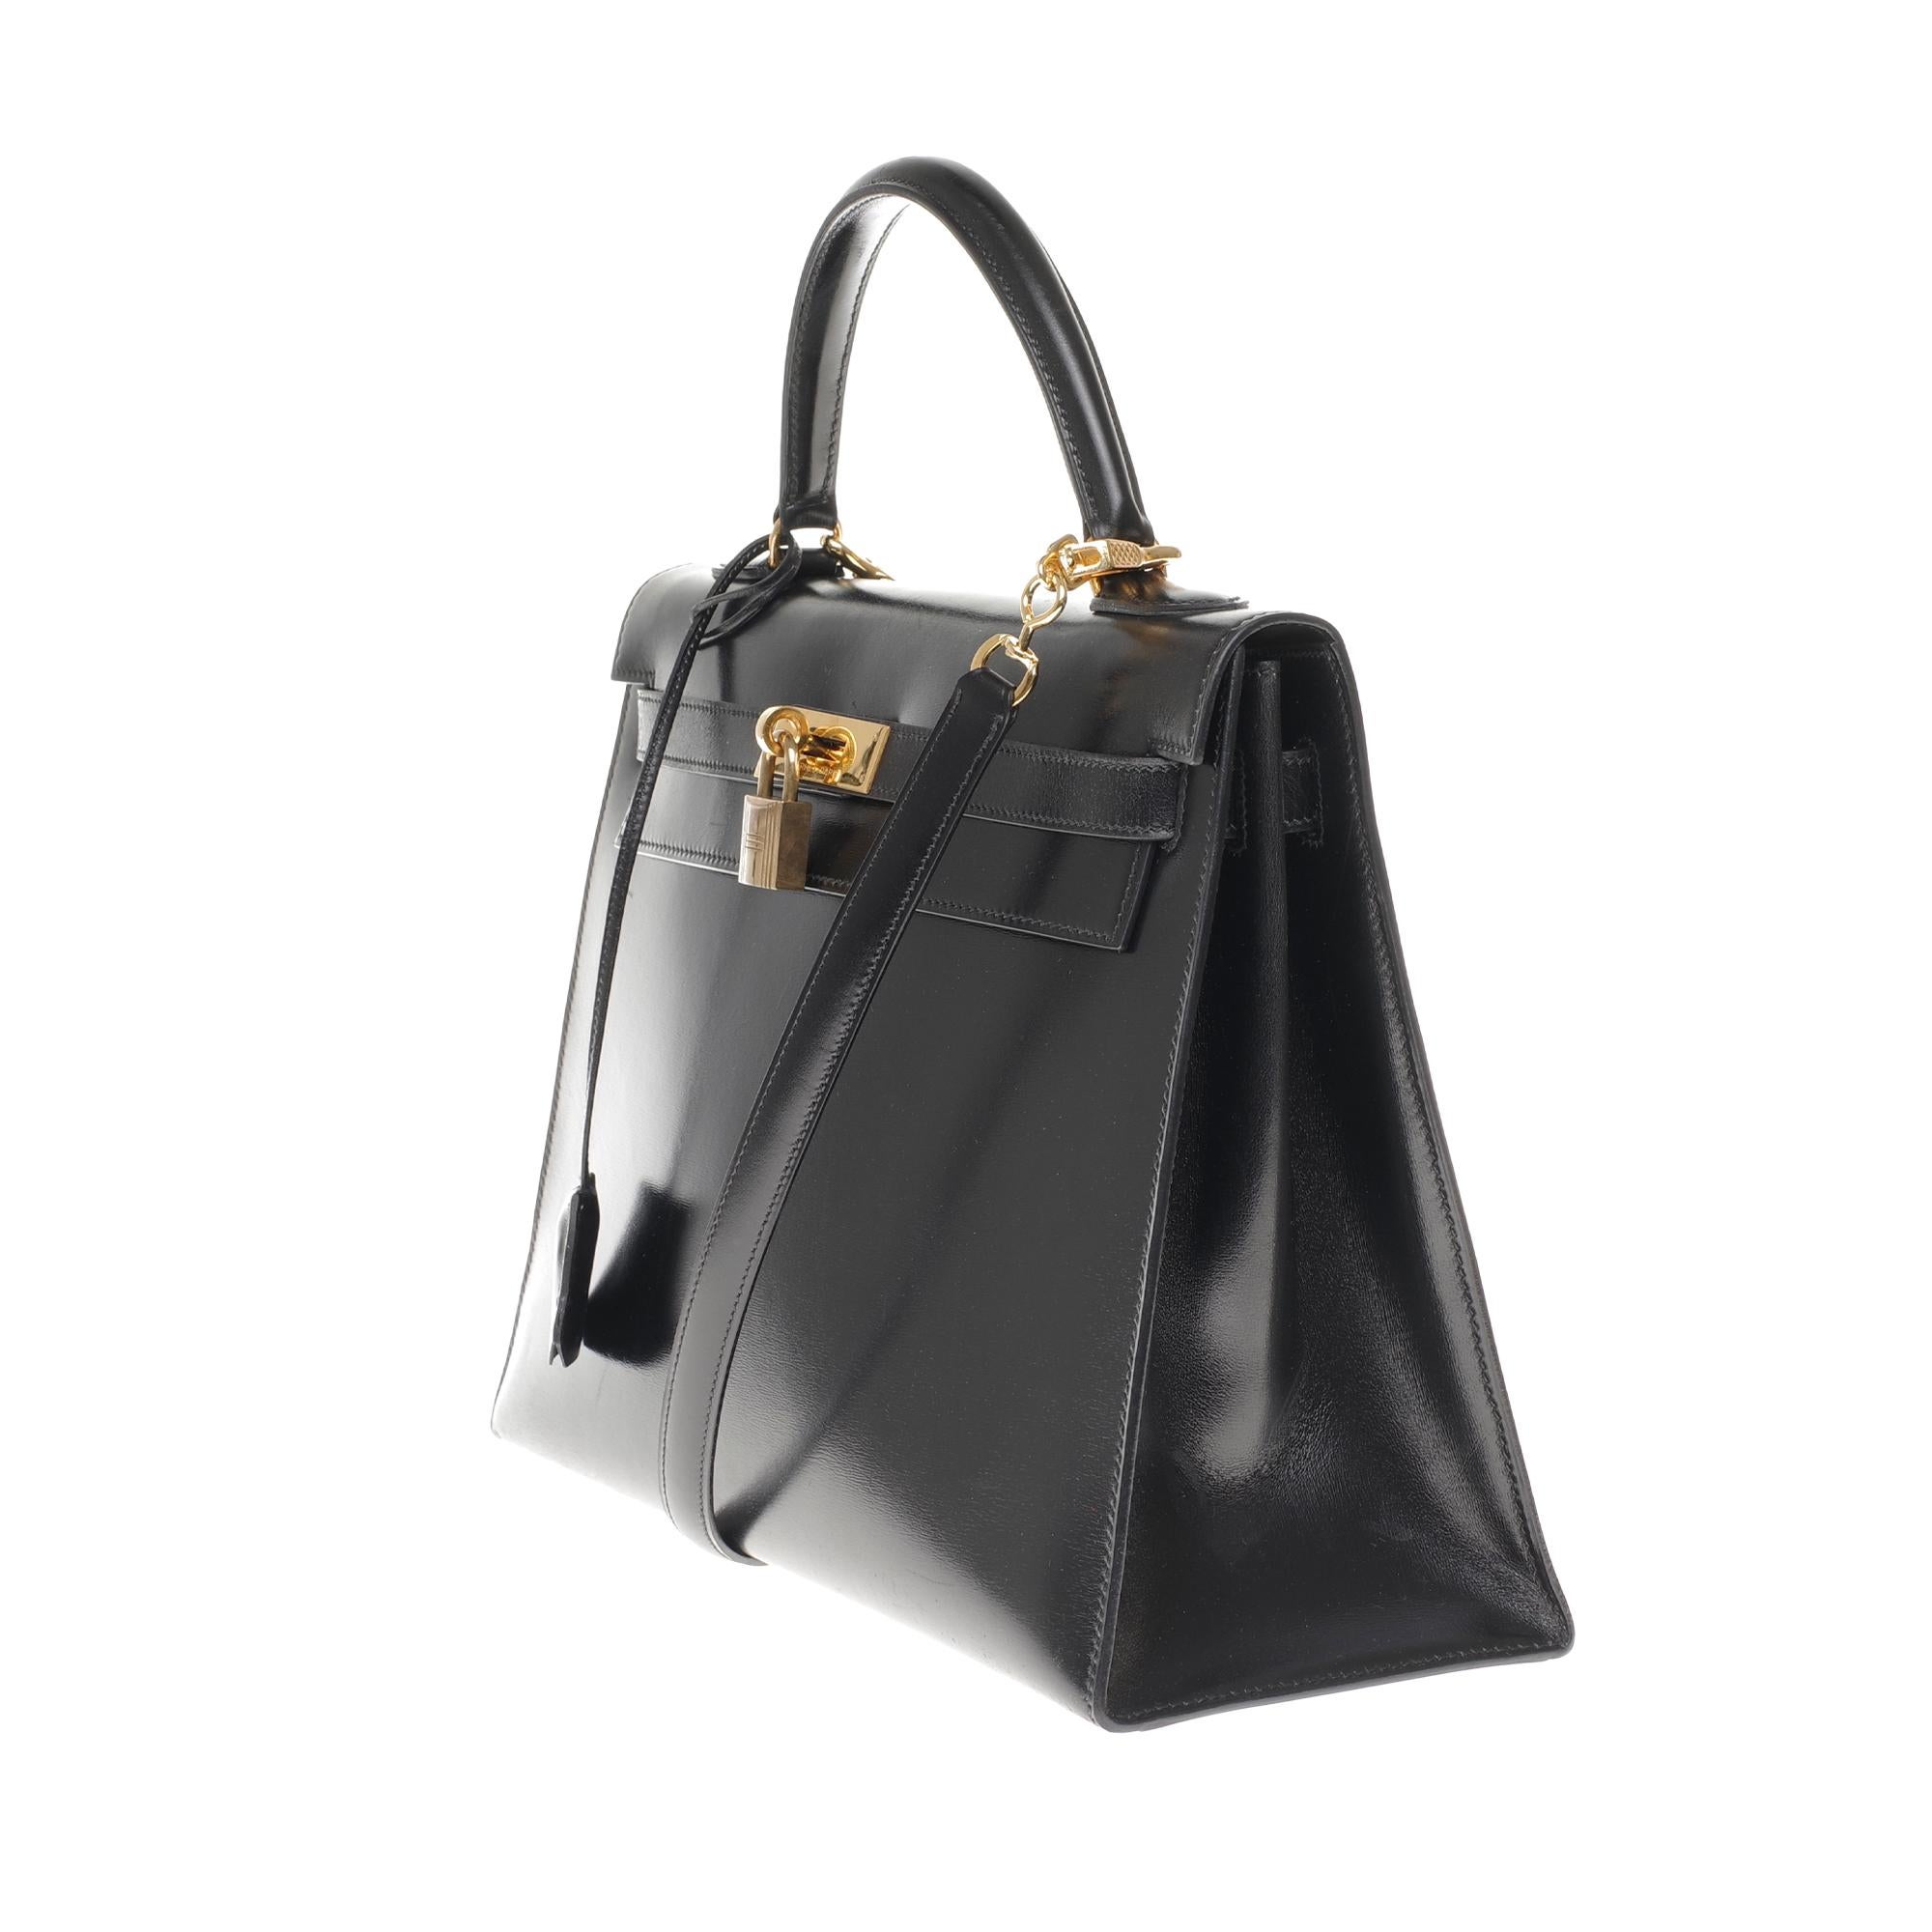 Black Hermès Kelly 32cm sellier handbag with strap in black calfskin, gold hardware!